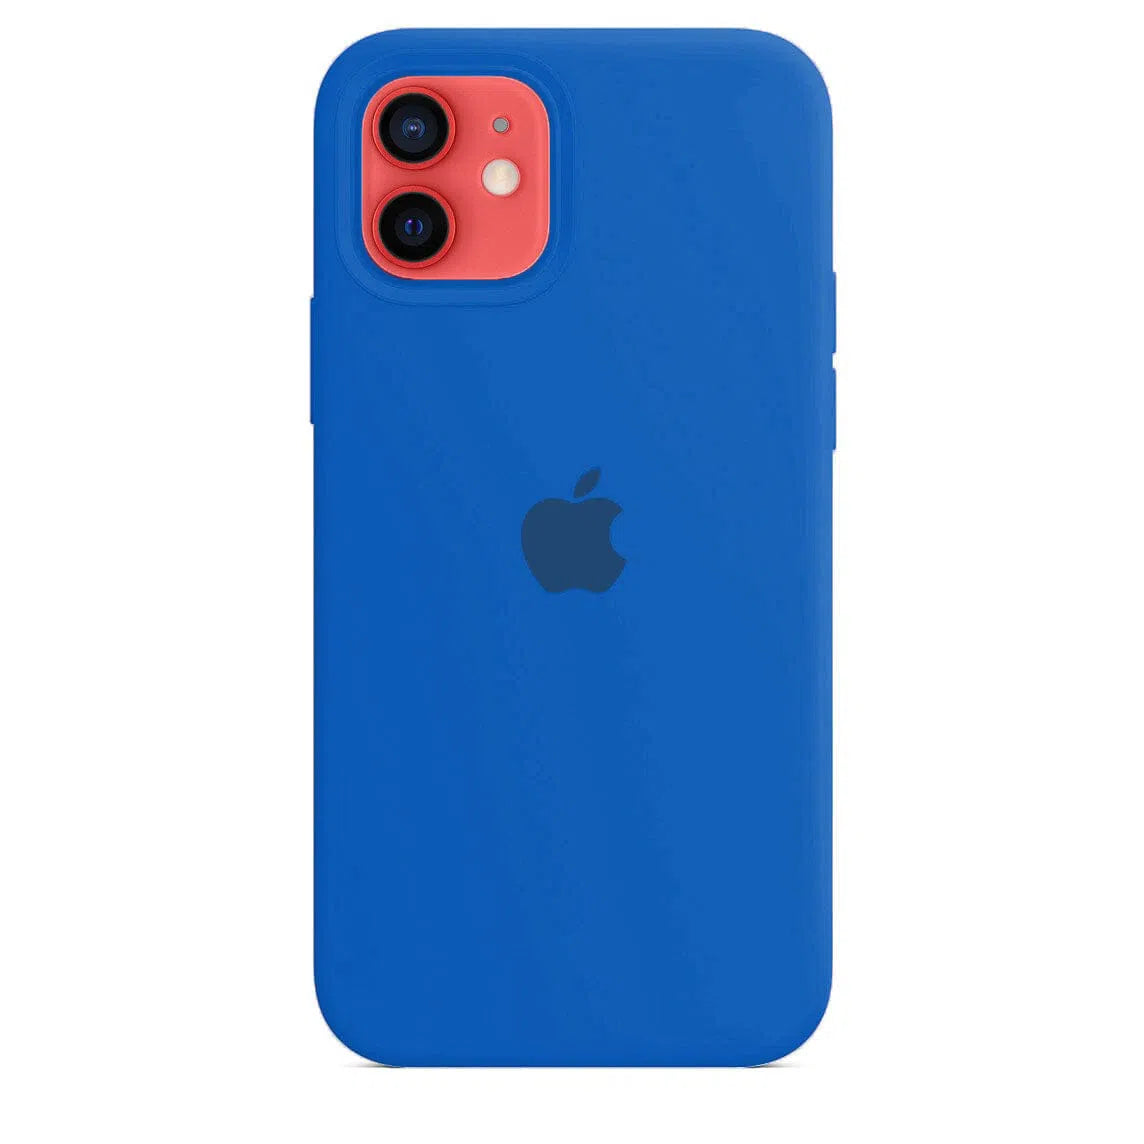 Husa iPhone Silicone Case Blue Cobalt (Albastru) Anca's Store 12mini 